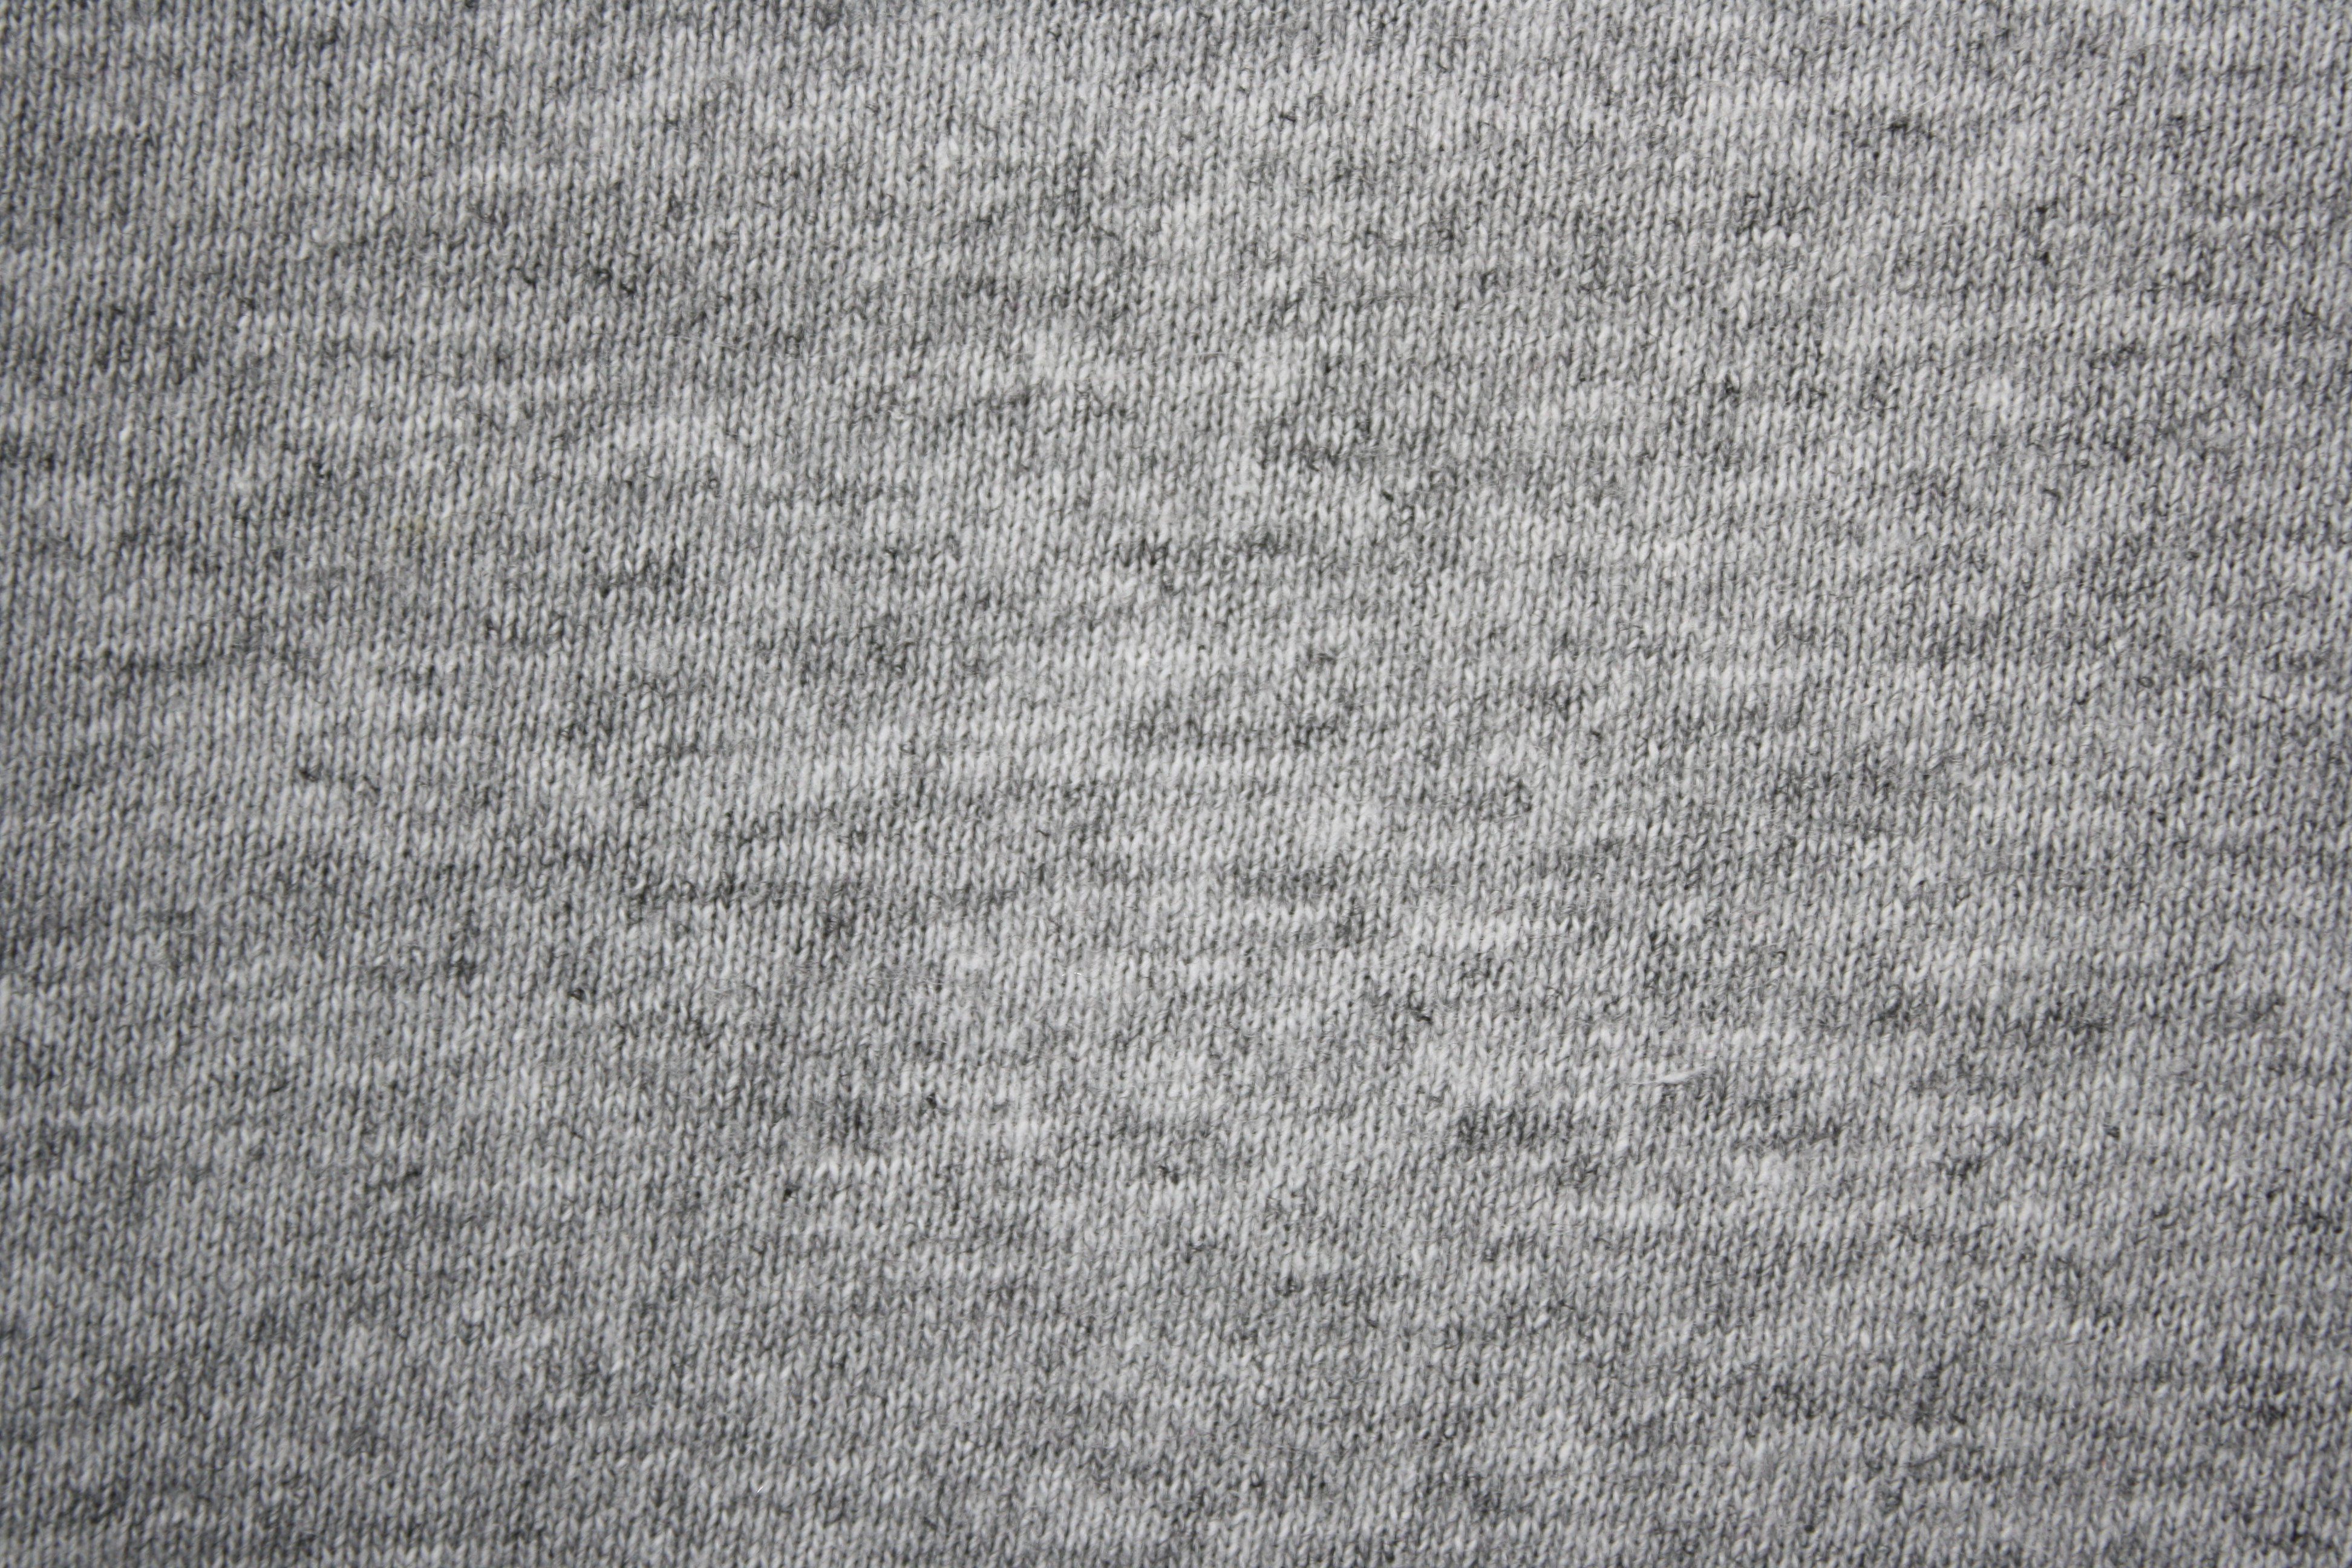 gray-heather-knit-t-shit-fabric-texture.jpg (JPEG Image, 3888 × 2592 ...